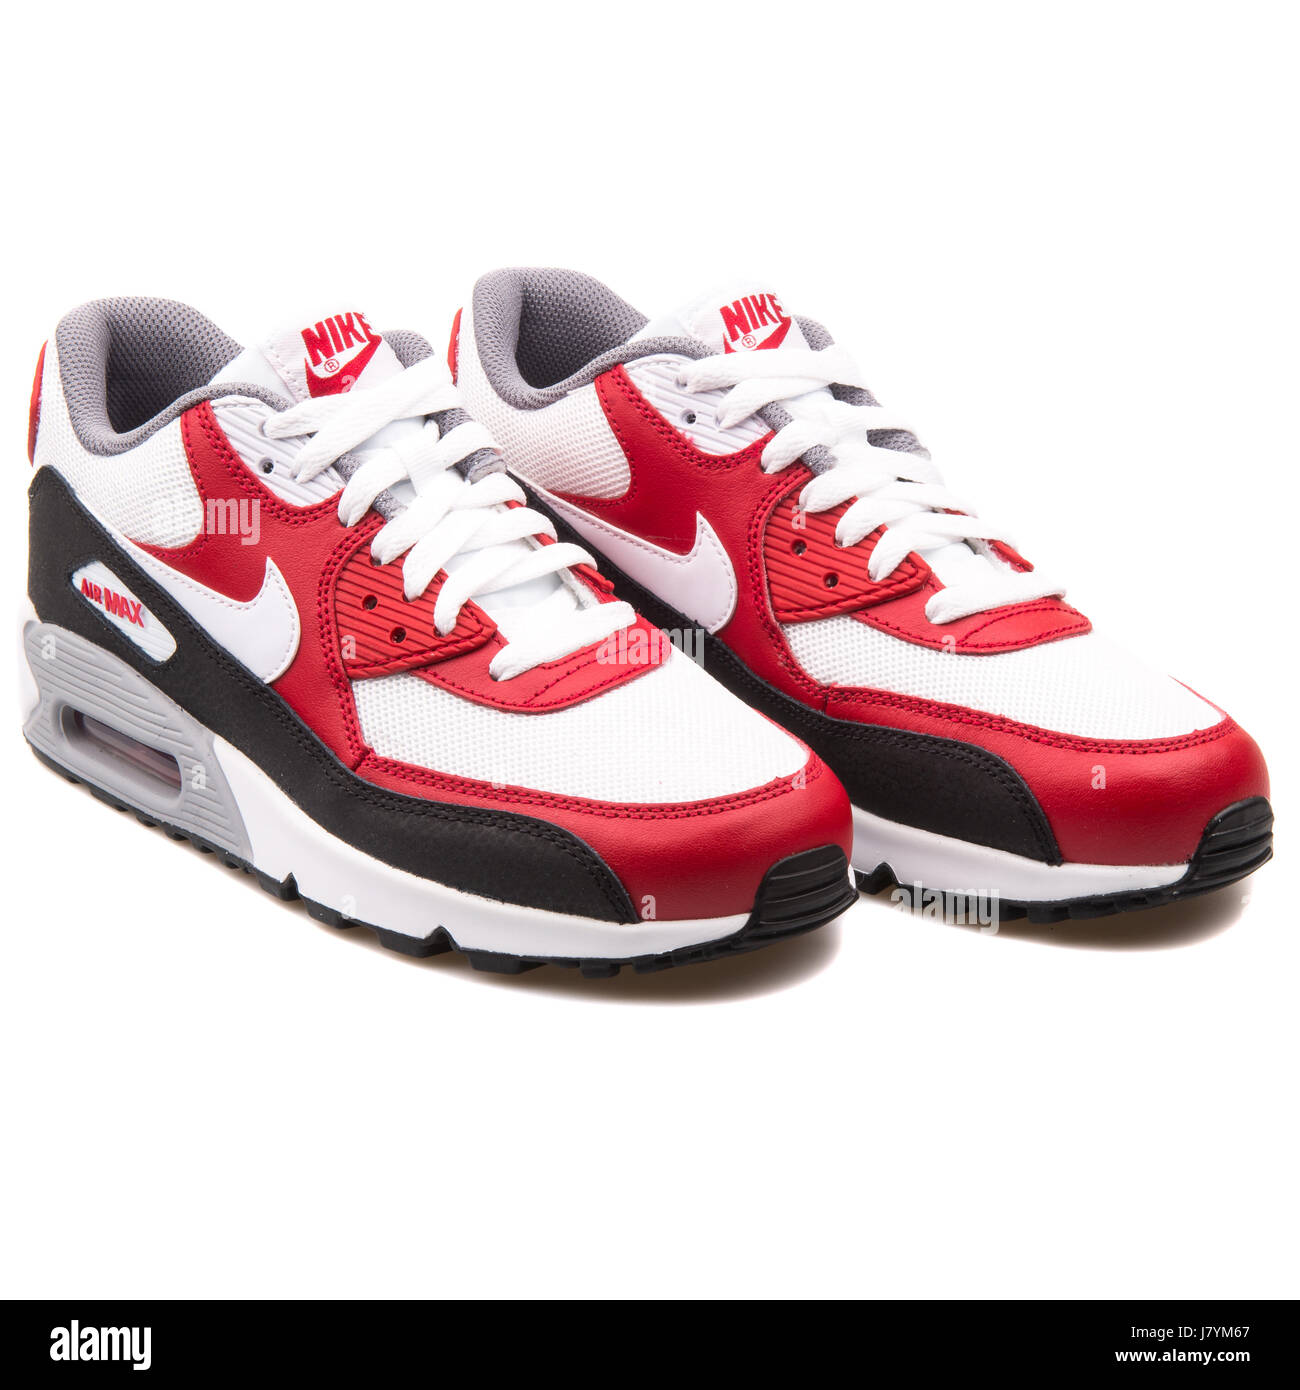 Nike Air Max 90 Mesh rot weiß und Jugend Sport-Sneaker - 724824-102 Stockfotografie - Alamy